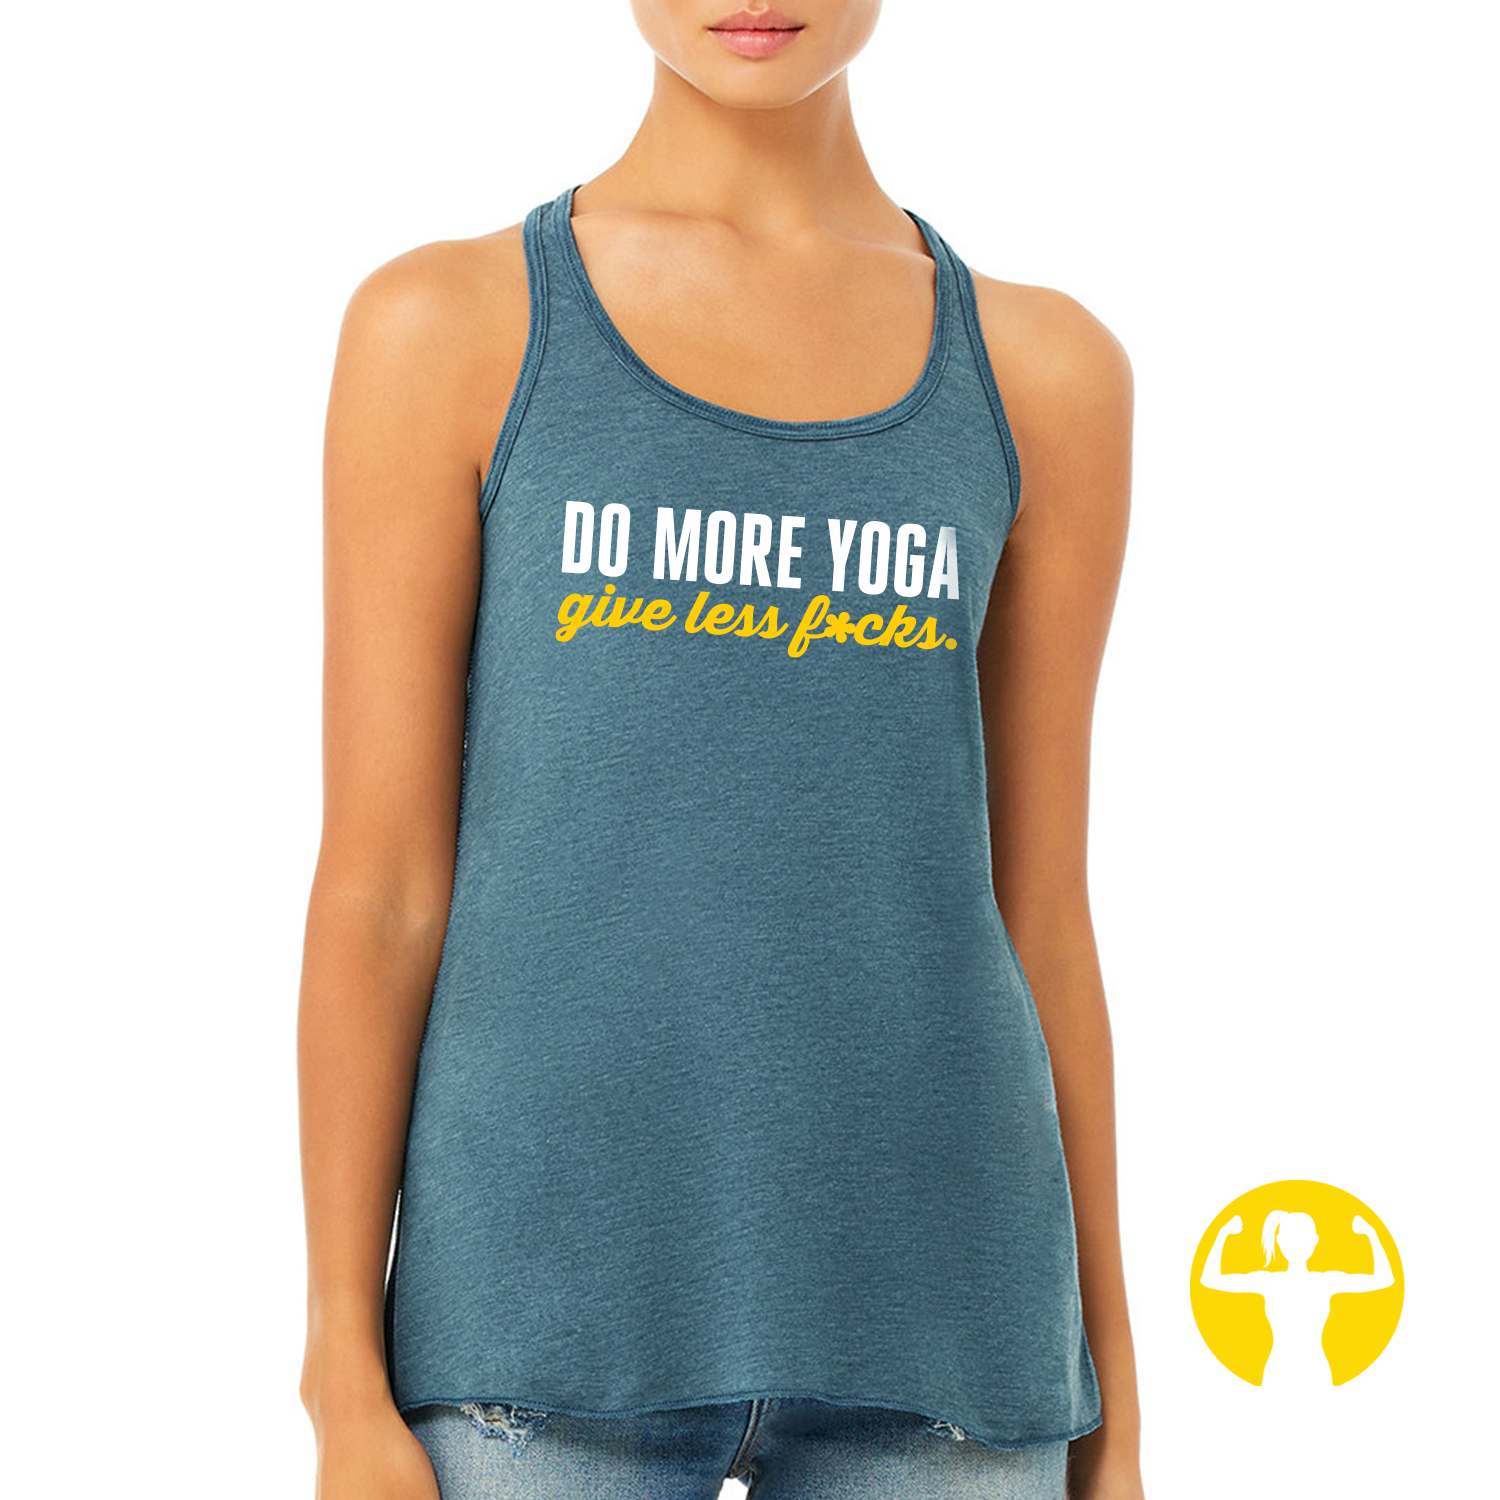 Do More Yoga, Give Less F*c, Funny Yoga Shirts